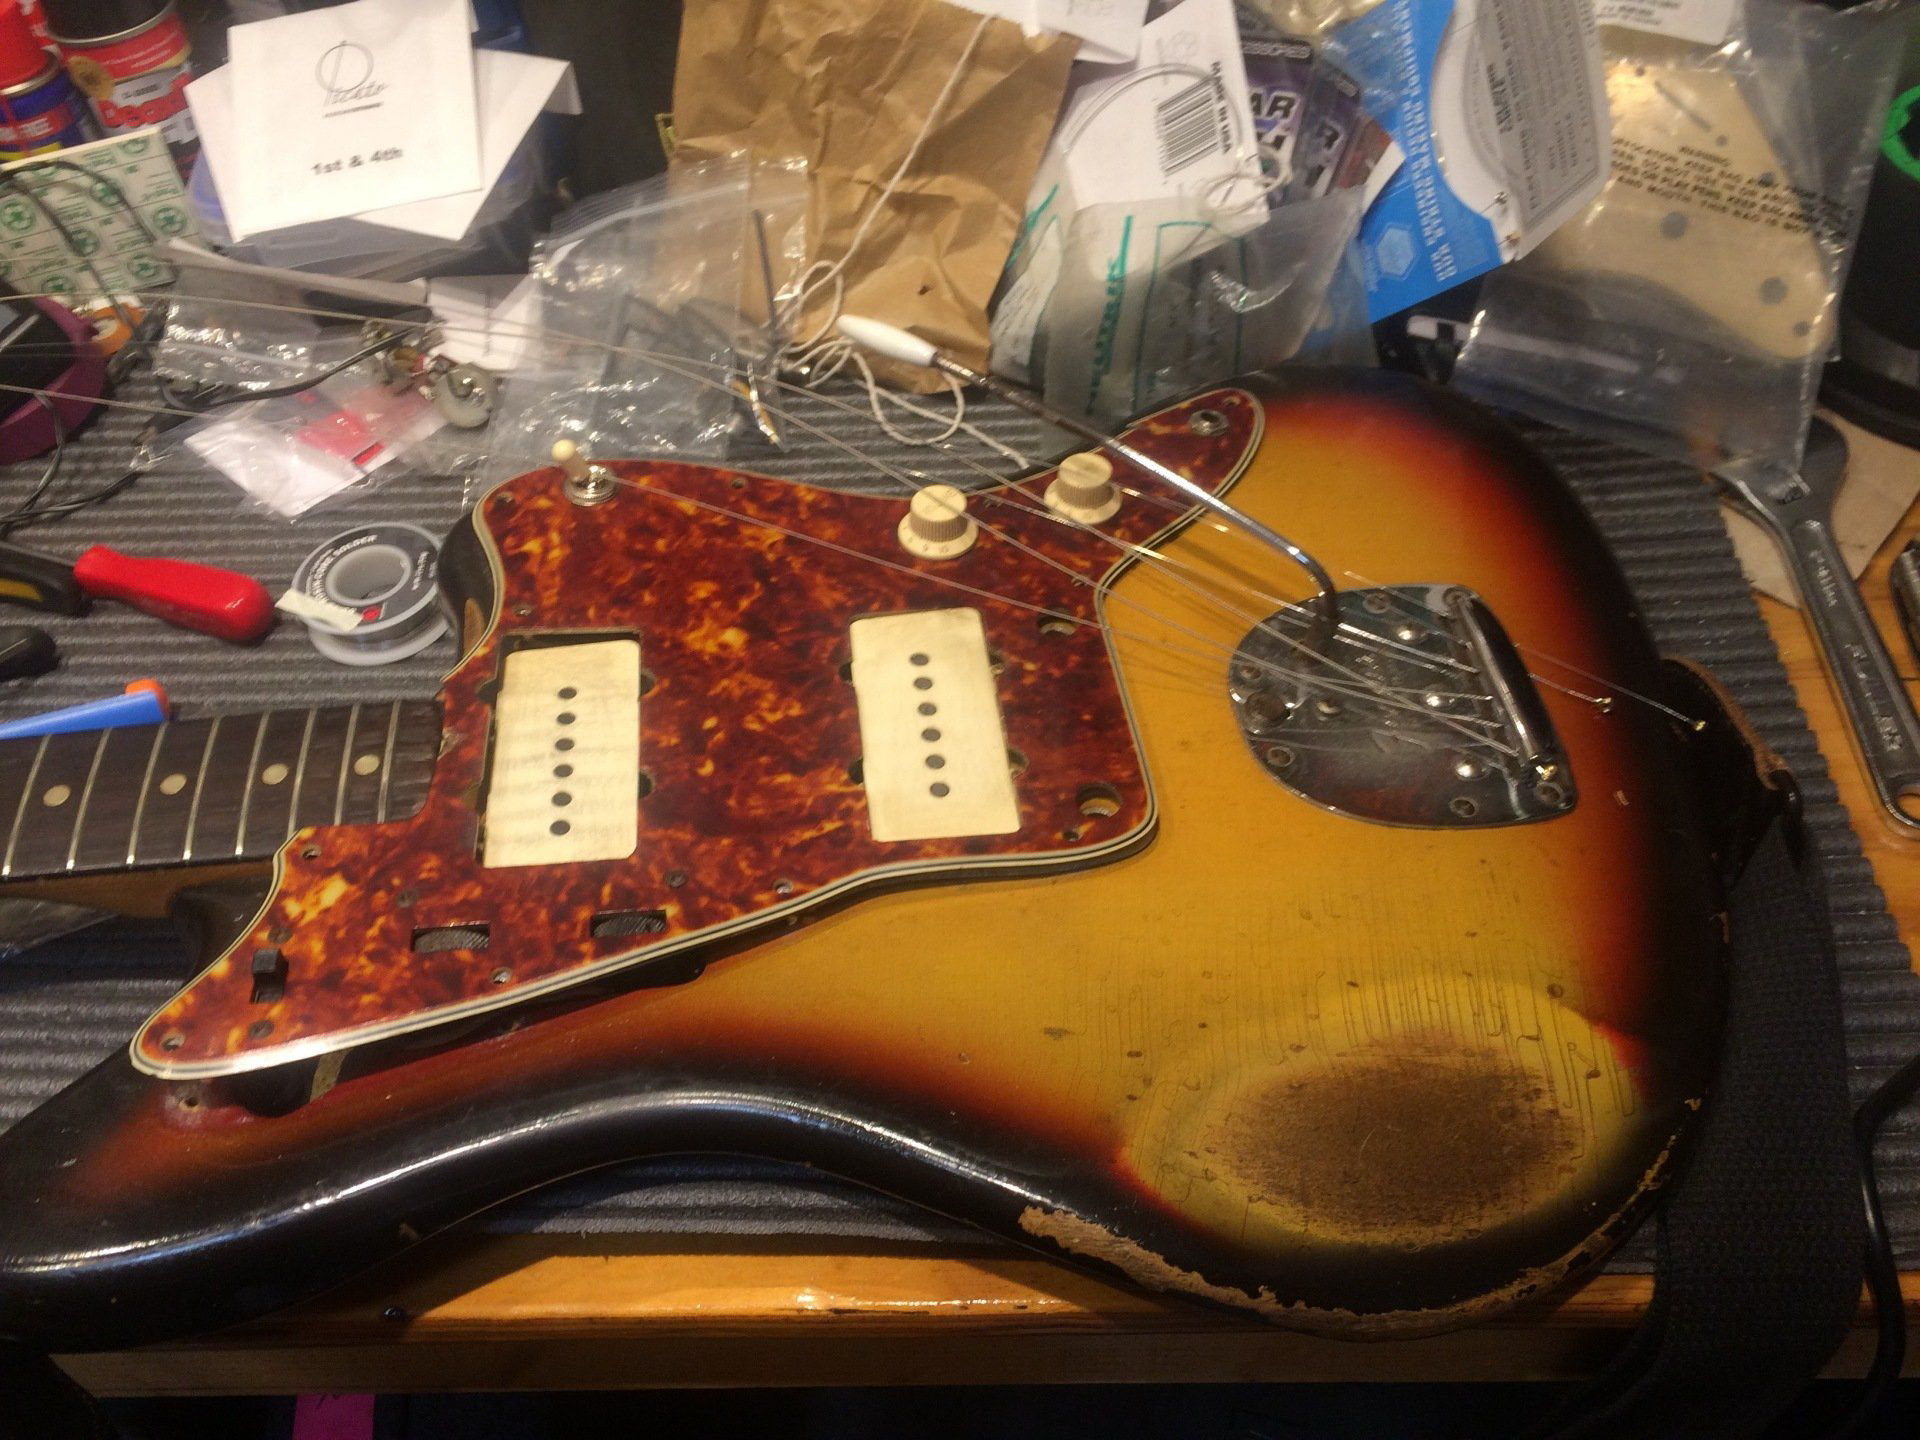 1965 Fender Jazzmaster that belongs to John Parish in the workshop at New Cut Studios